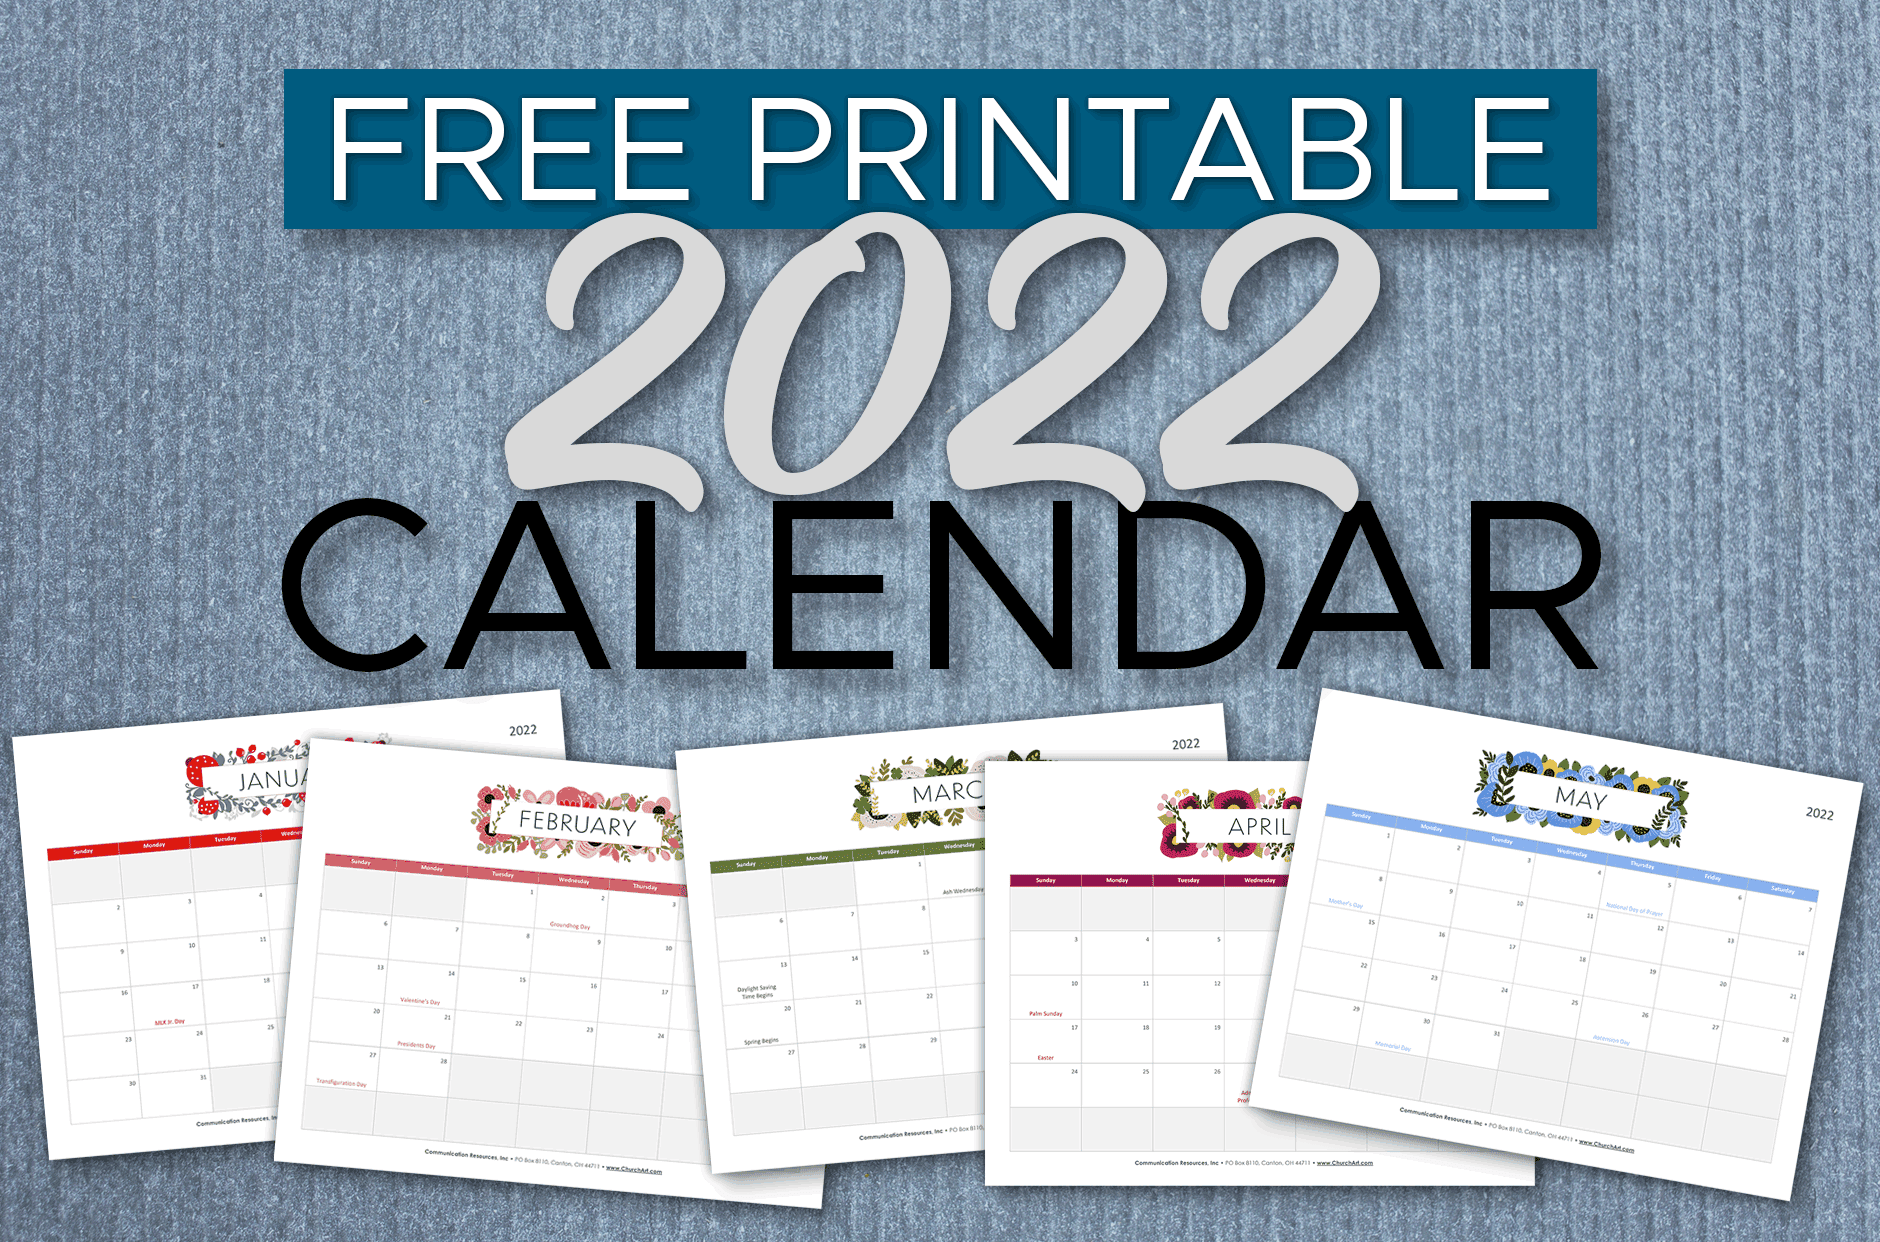 Preaching Calendar Template 2022 Free Printable 2022 Church Calendar | Churchart.com Blog